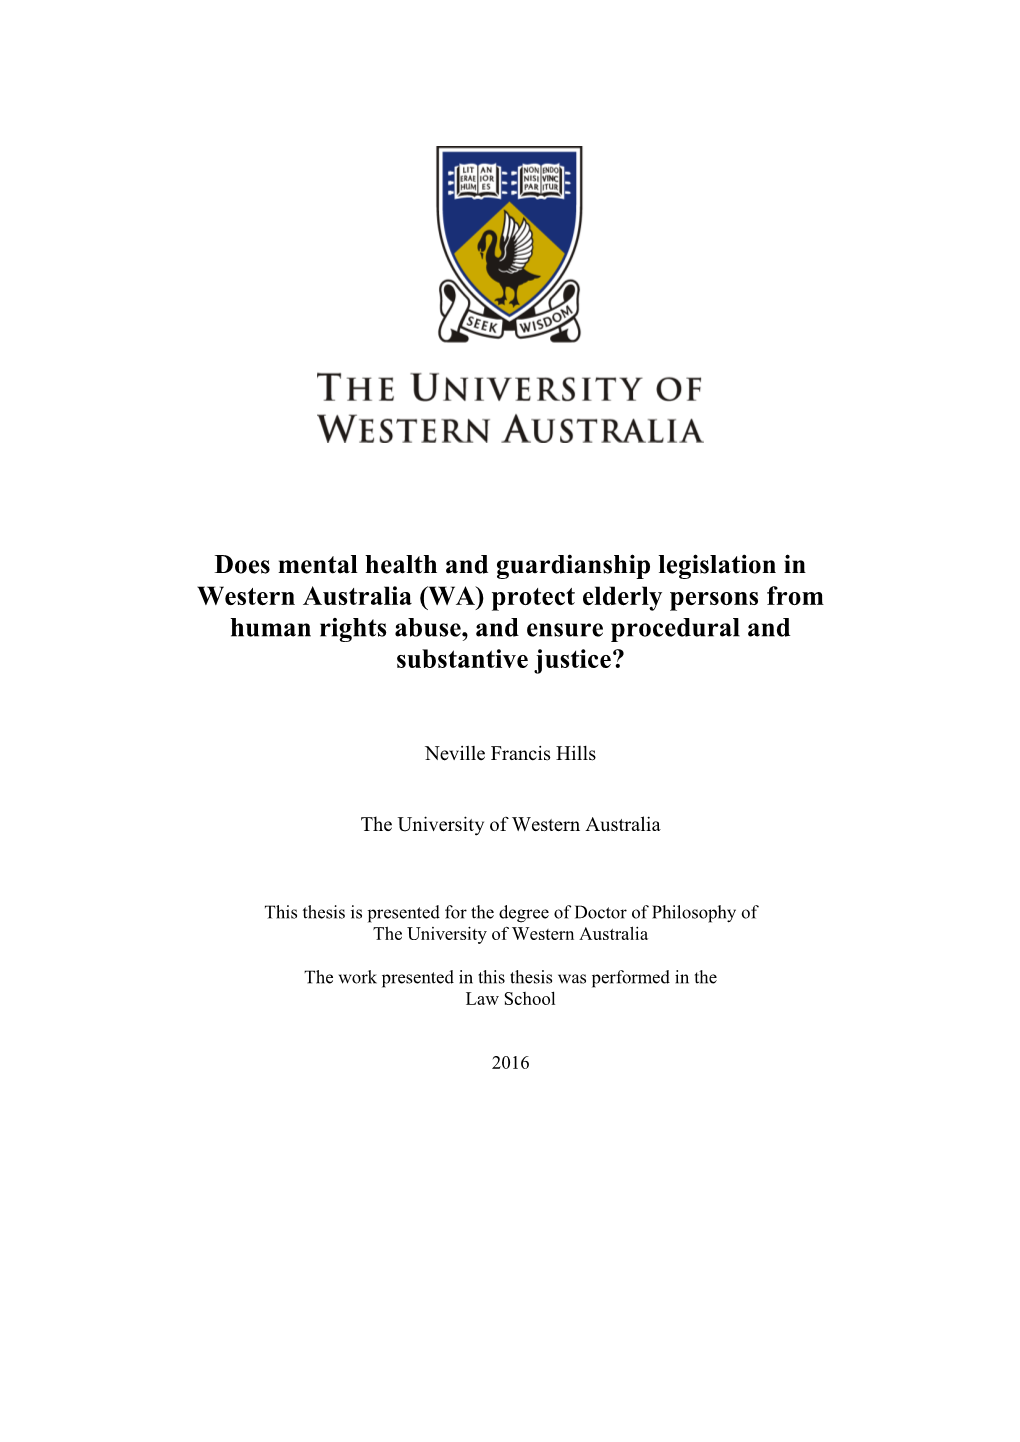 Does Mental Health and Guardianship Legislation in Western Australia (WA